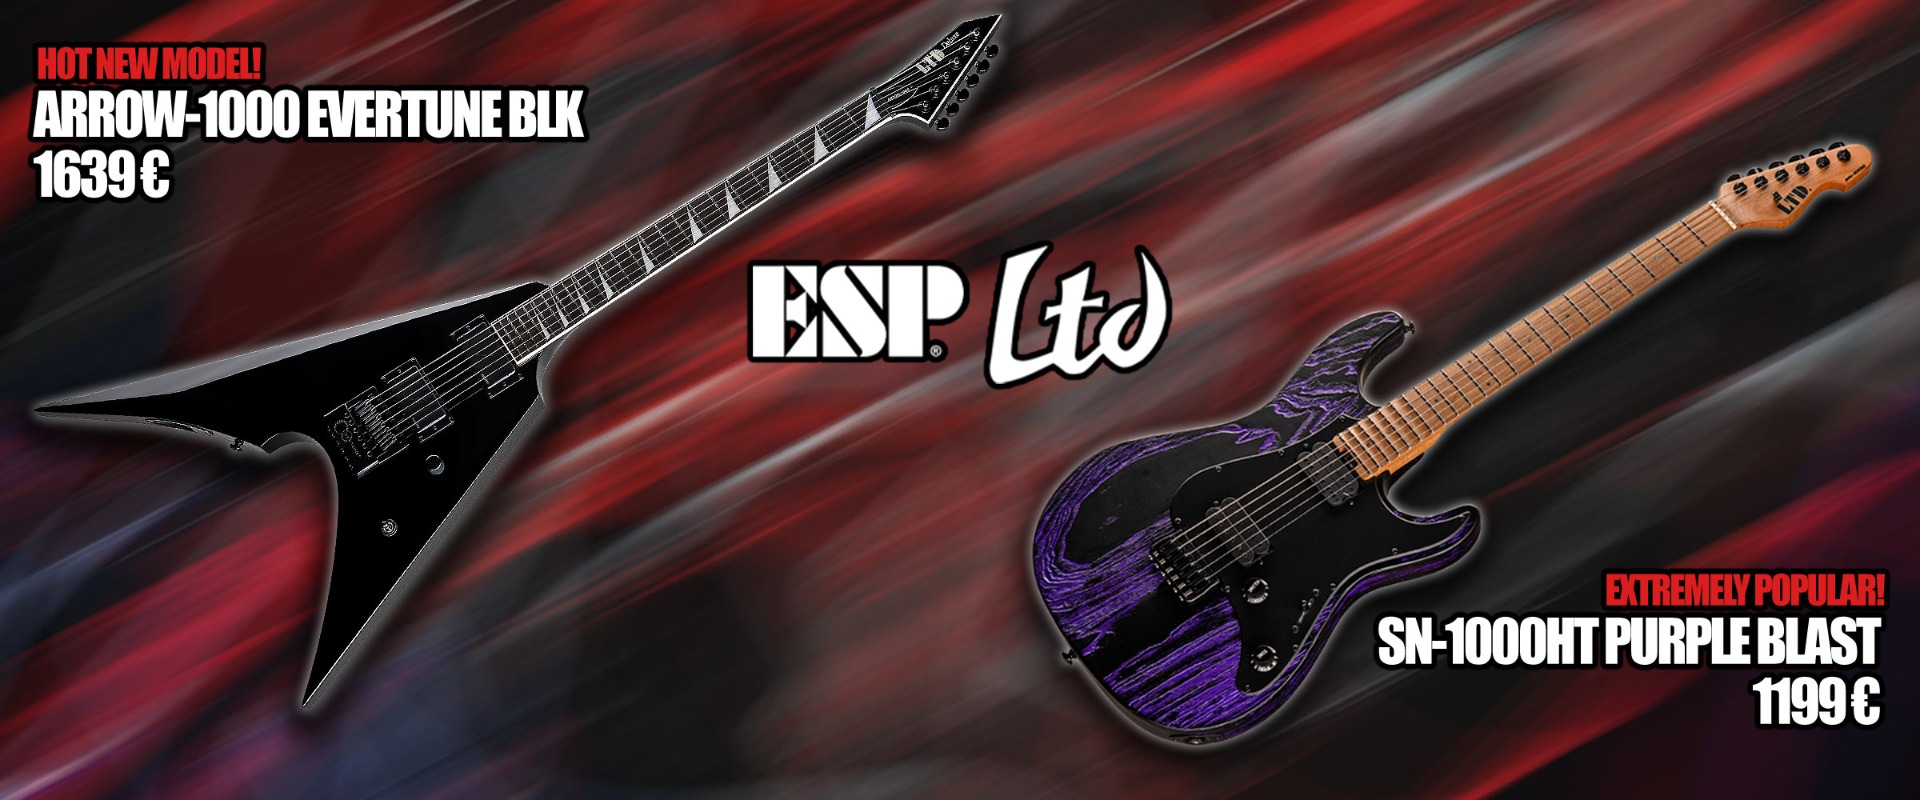 Top Quality ESP LTD 1000-series Guitars!